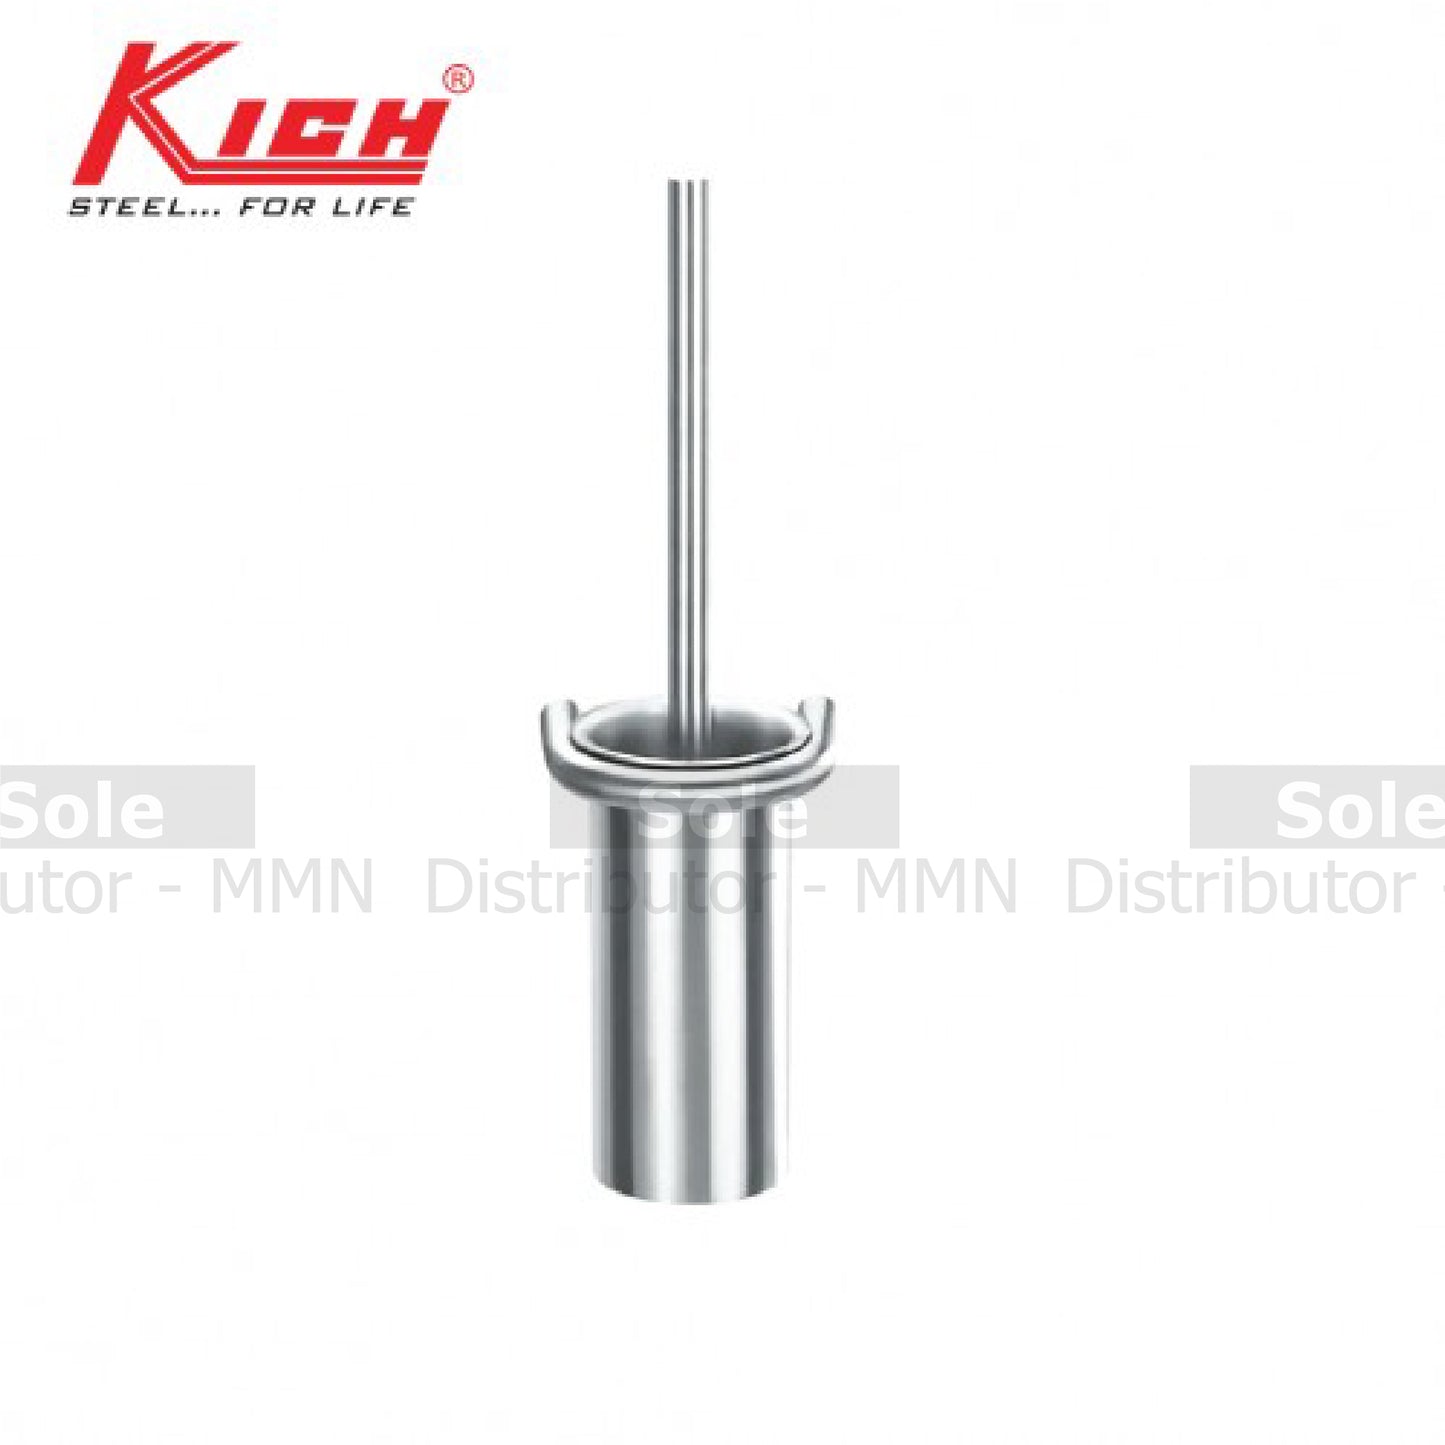 Kich Toilet Brush Holder, Size 211x85x228.5mm, AISI Corrosion Resistance Stainless Steel 316 Grade, Matt Finish -KBA250S